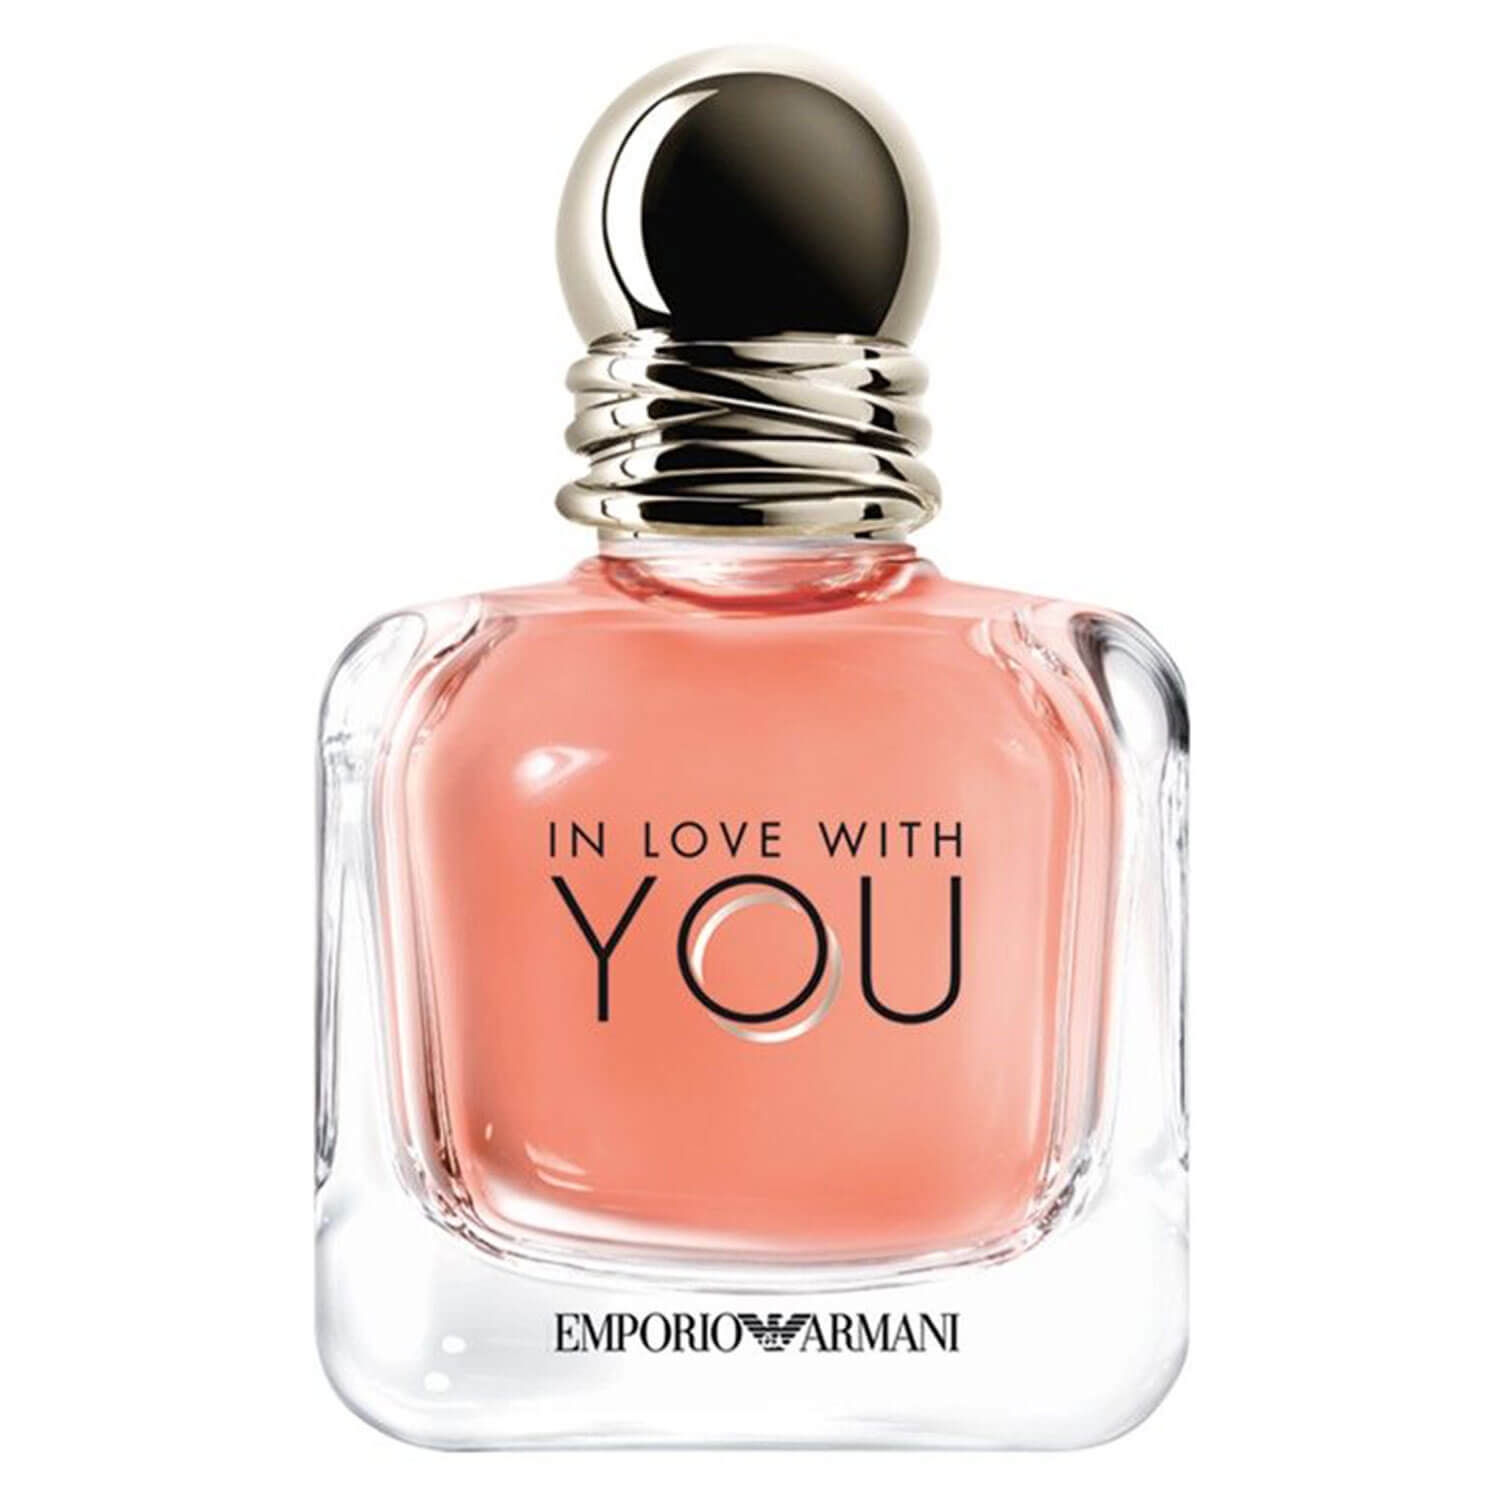 Produktbild von Emporio Armani - In Love With You Eau de Parfum